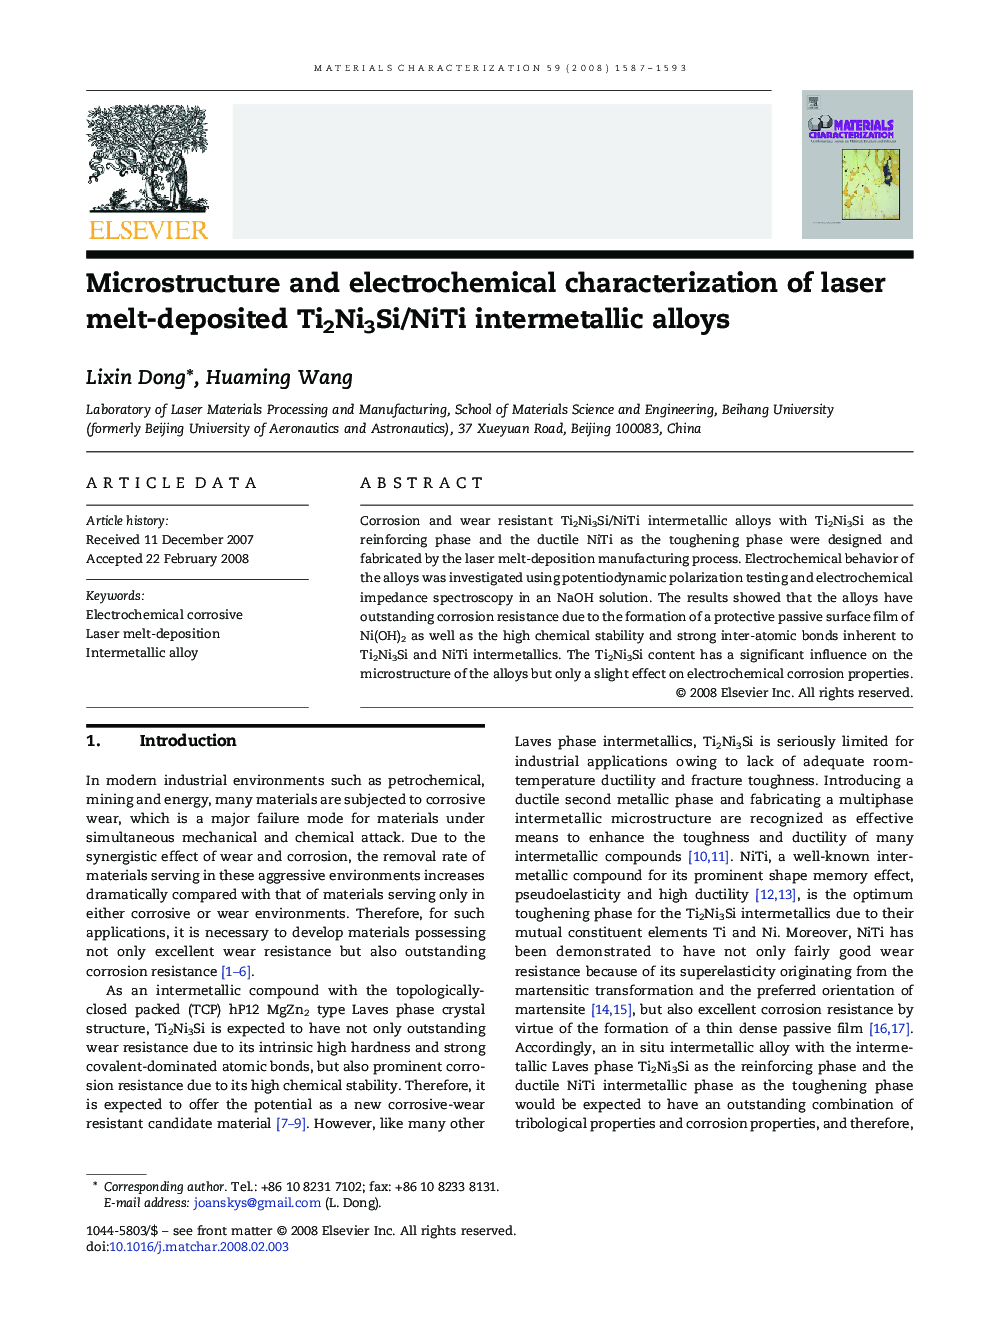 Microstructure and electrochemical characterization of laser melt-deposited Ti2Ni3Si/NiTi intermetallic alloys